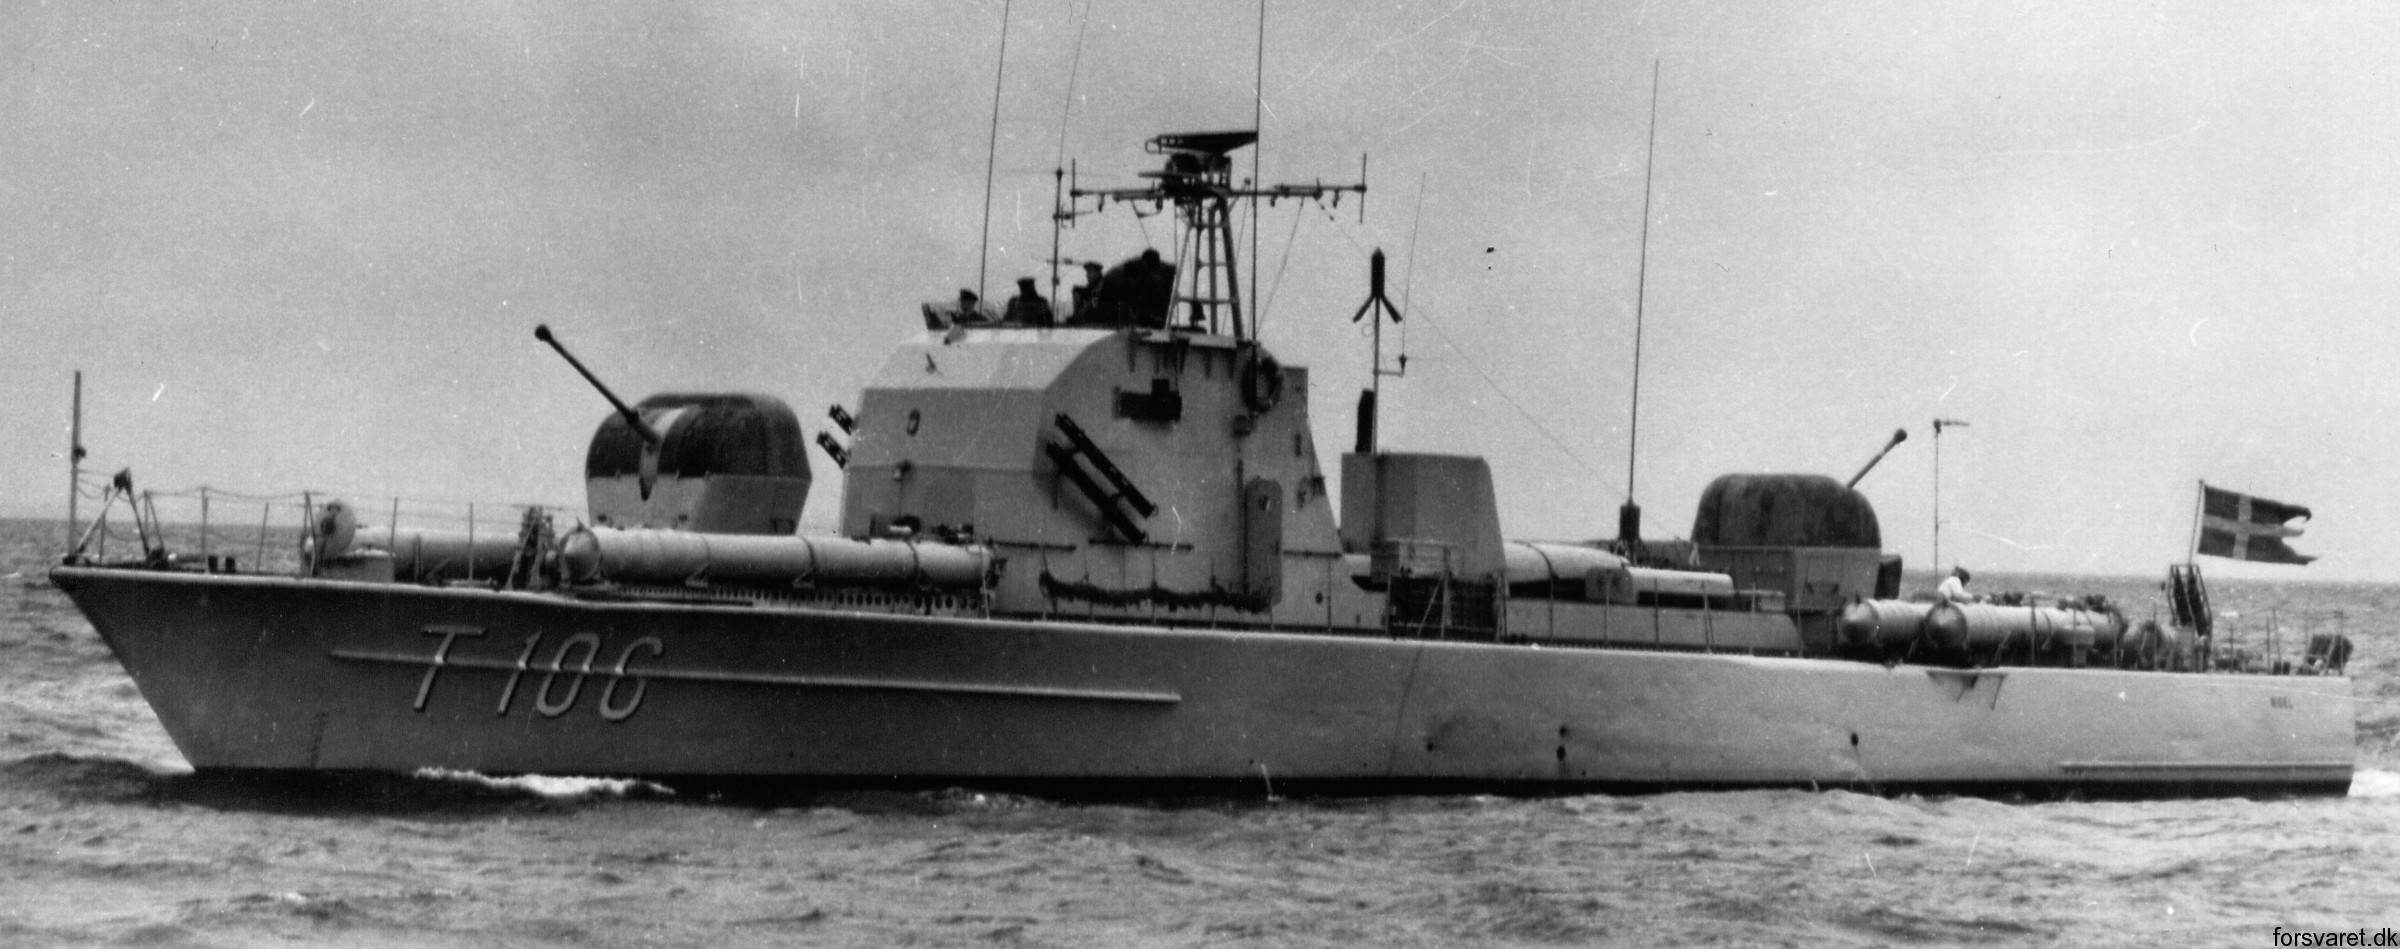 t106 rigel hms hswms plejad class fast attack craft torpedo boat vessel swedish navy svenska marinen 02